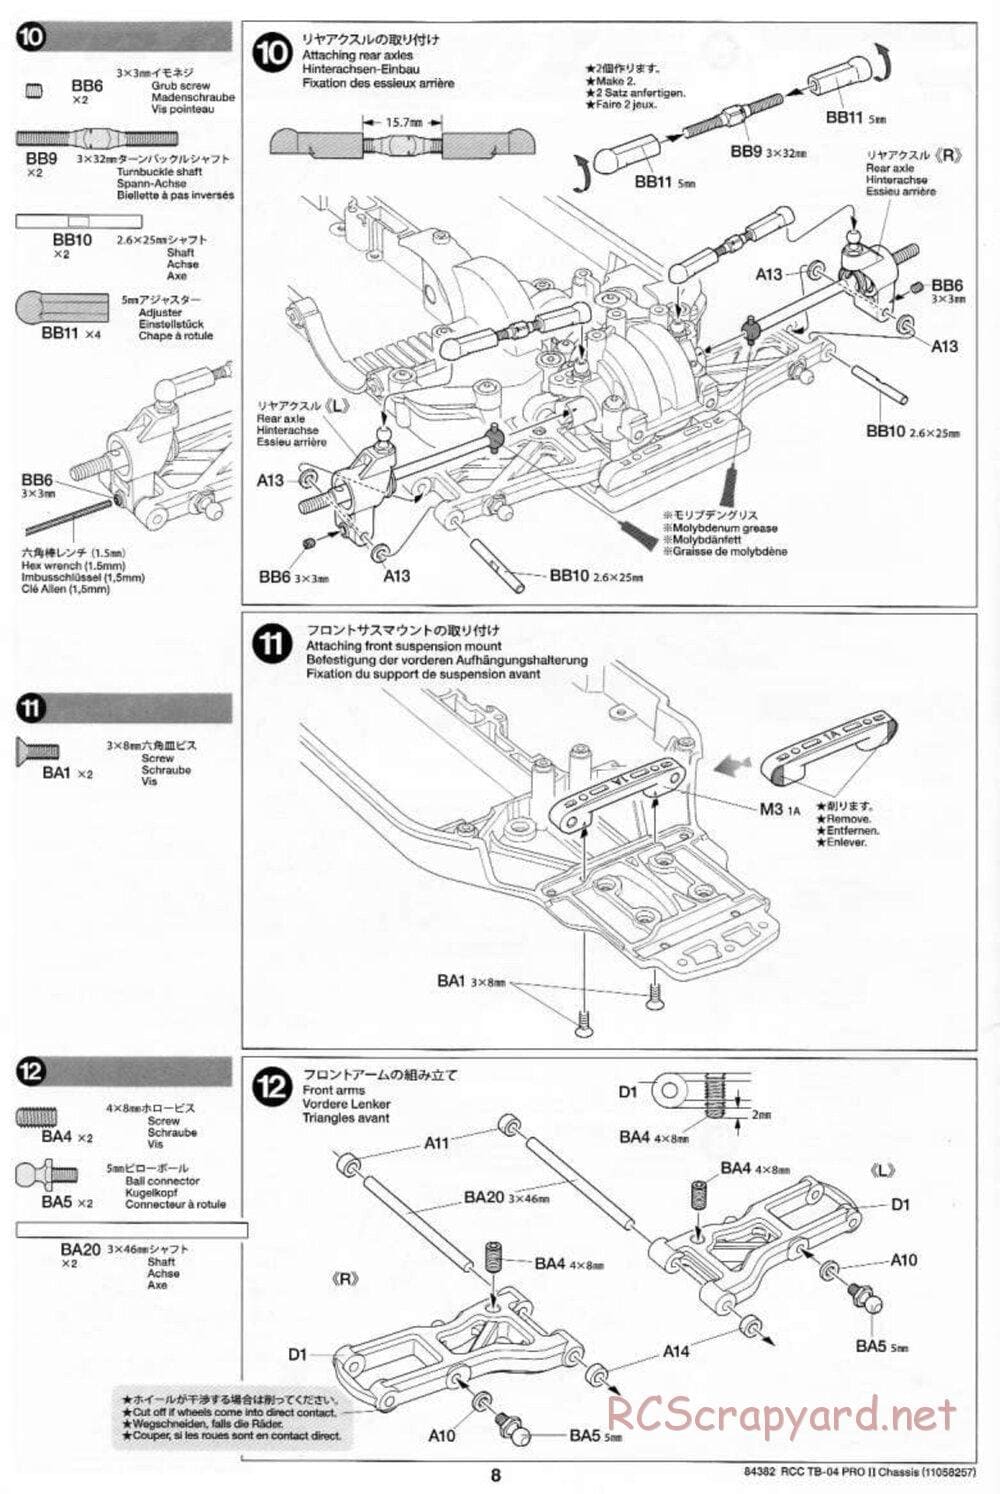 Tamiya - TB-04 Pro II Chassis - Manual - Page 8